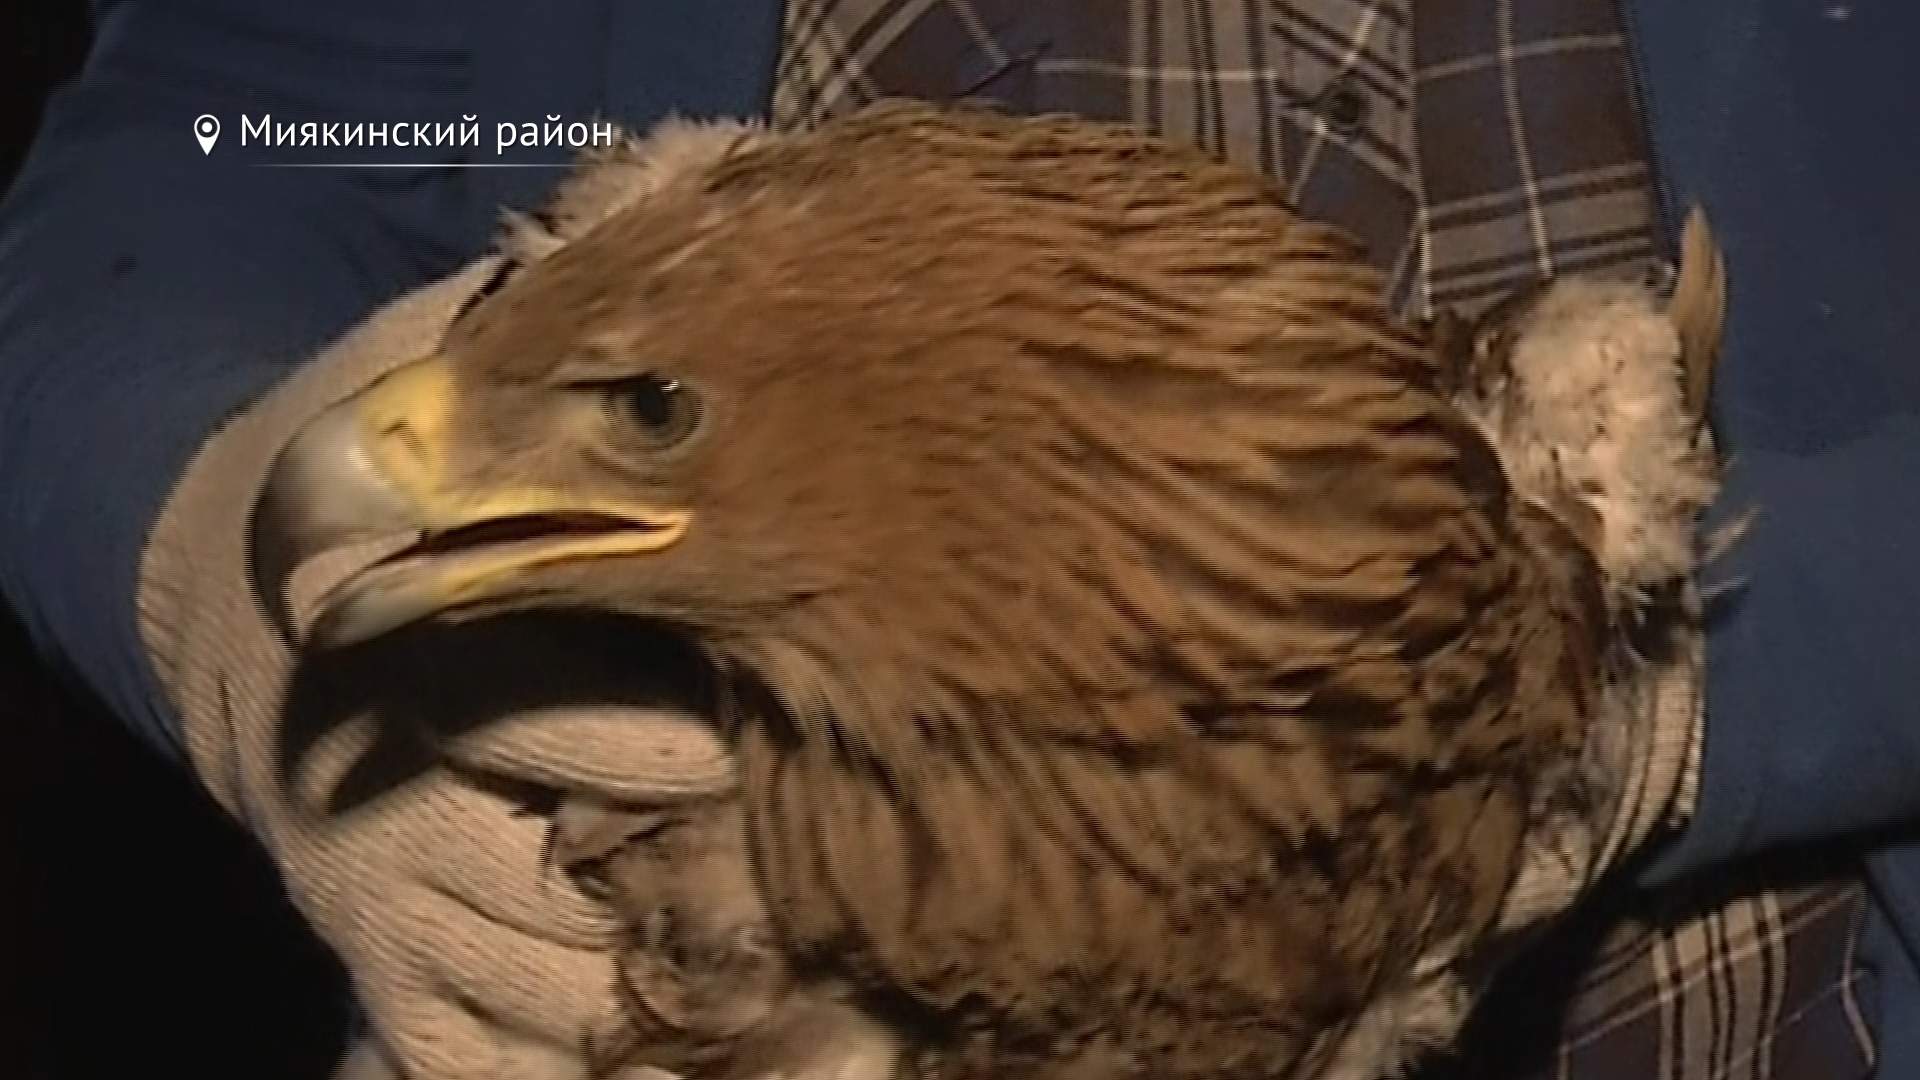 От стаи ворон в Башкирии спасали редкий вид орла - фото 2